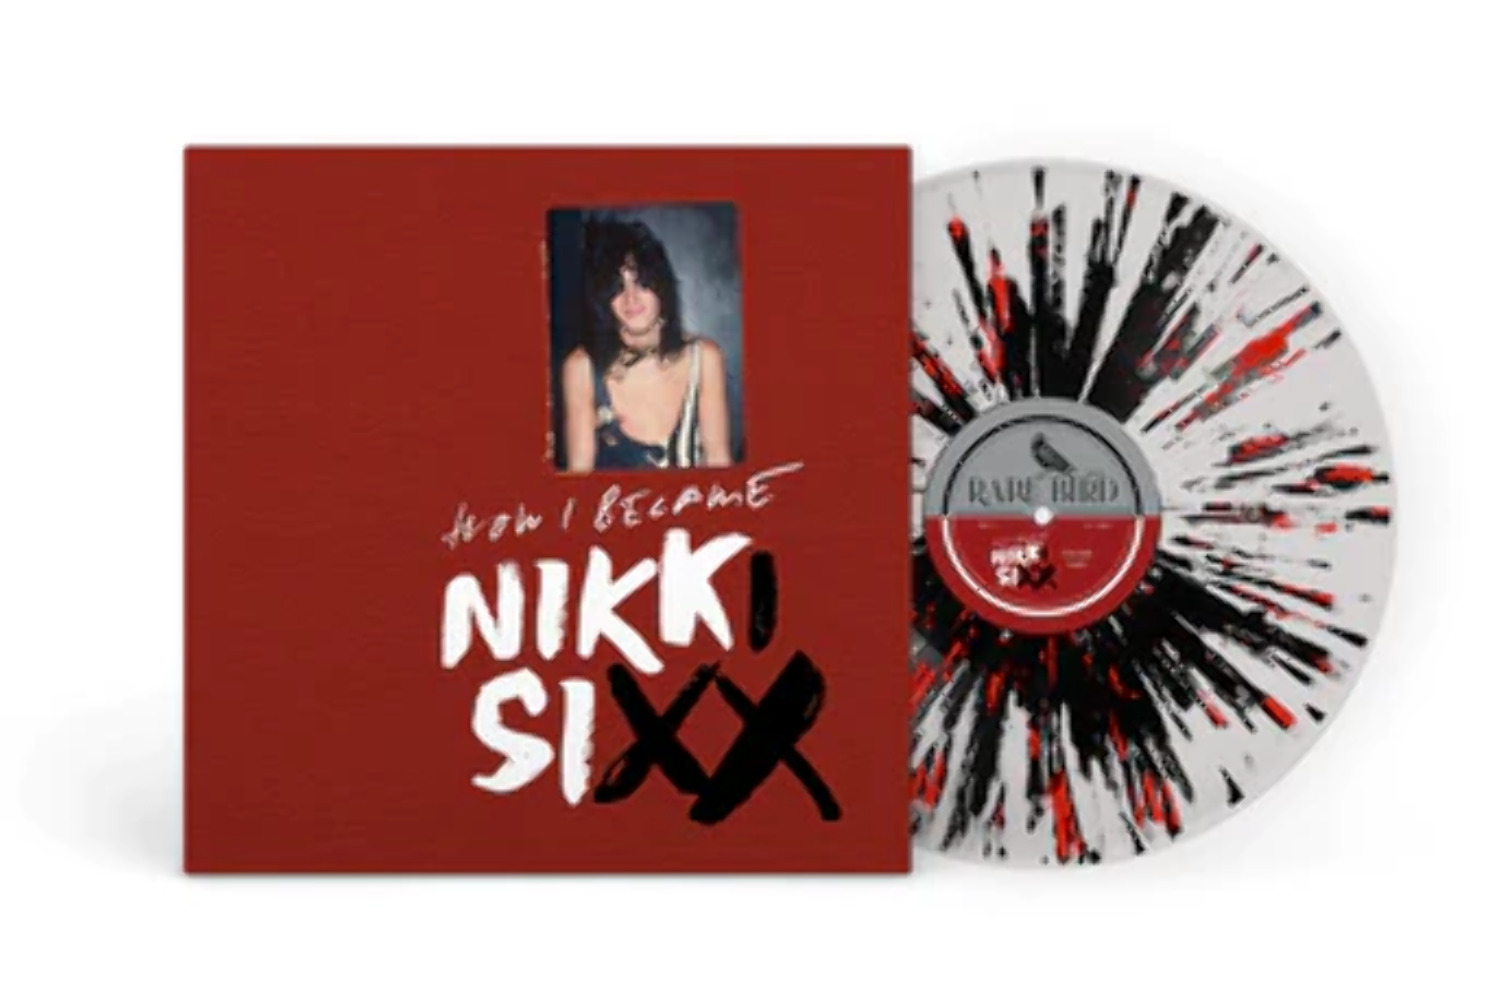 Nikki Sixx - The First 21: How I Became Nikki Sixx [Splatter Vinyl] NEW Sealed V